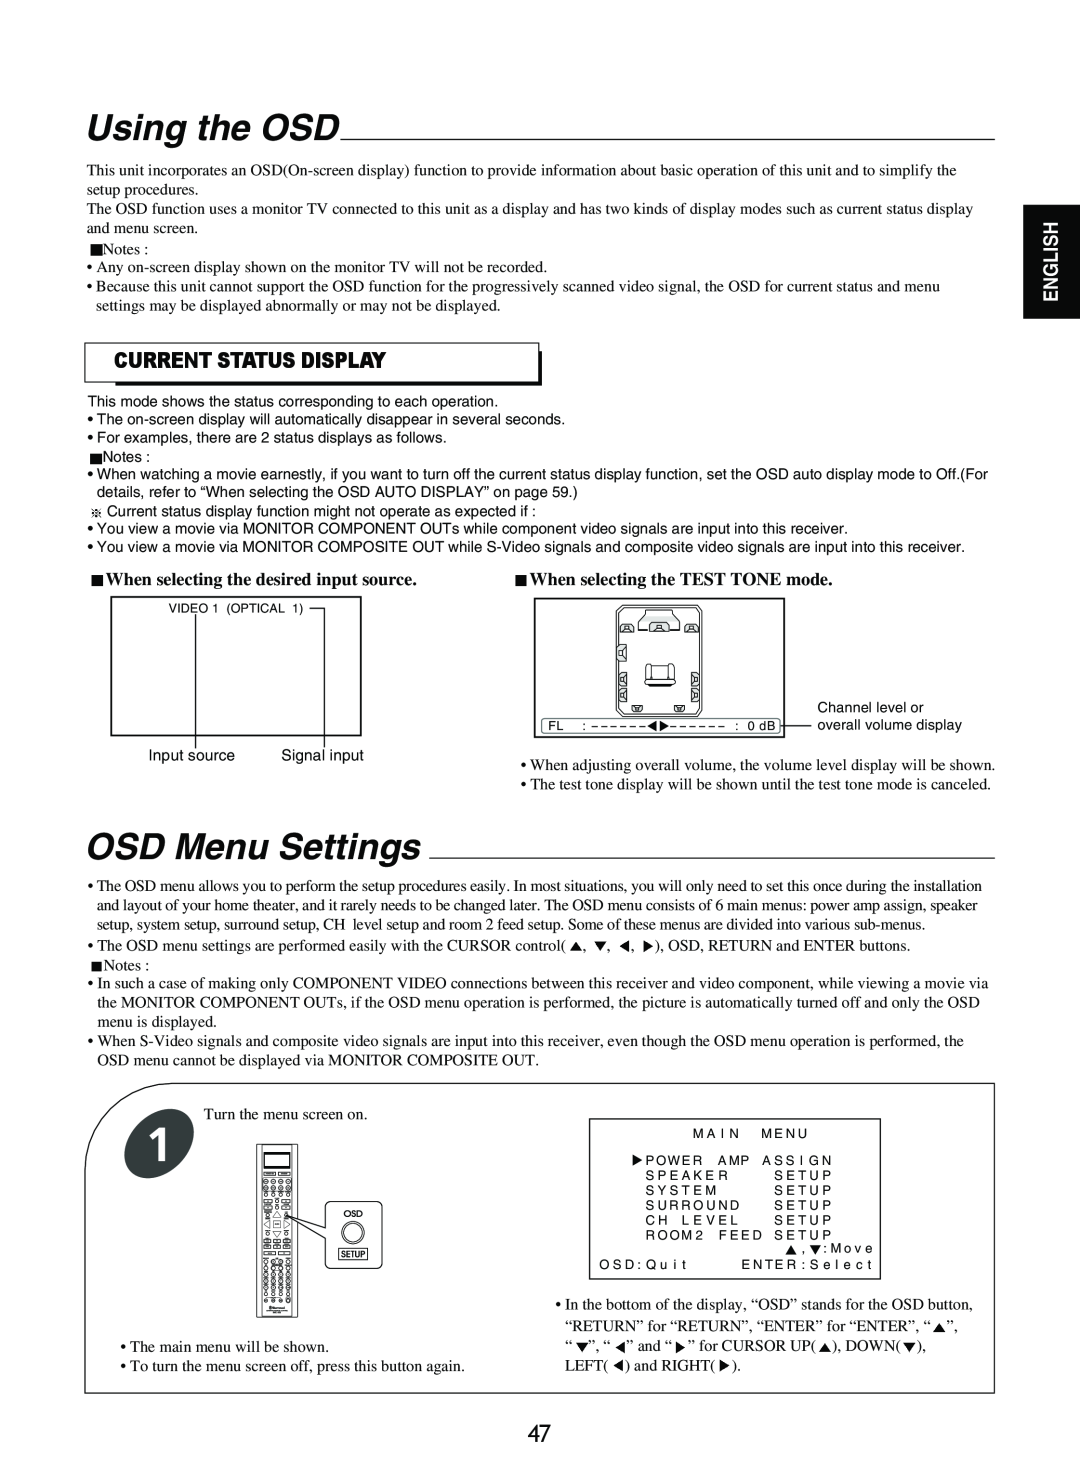 Sherwood R-865 Using the OSD, OSD Menu Settings, Current Status Display, When selecting the desired input source, English 